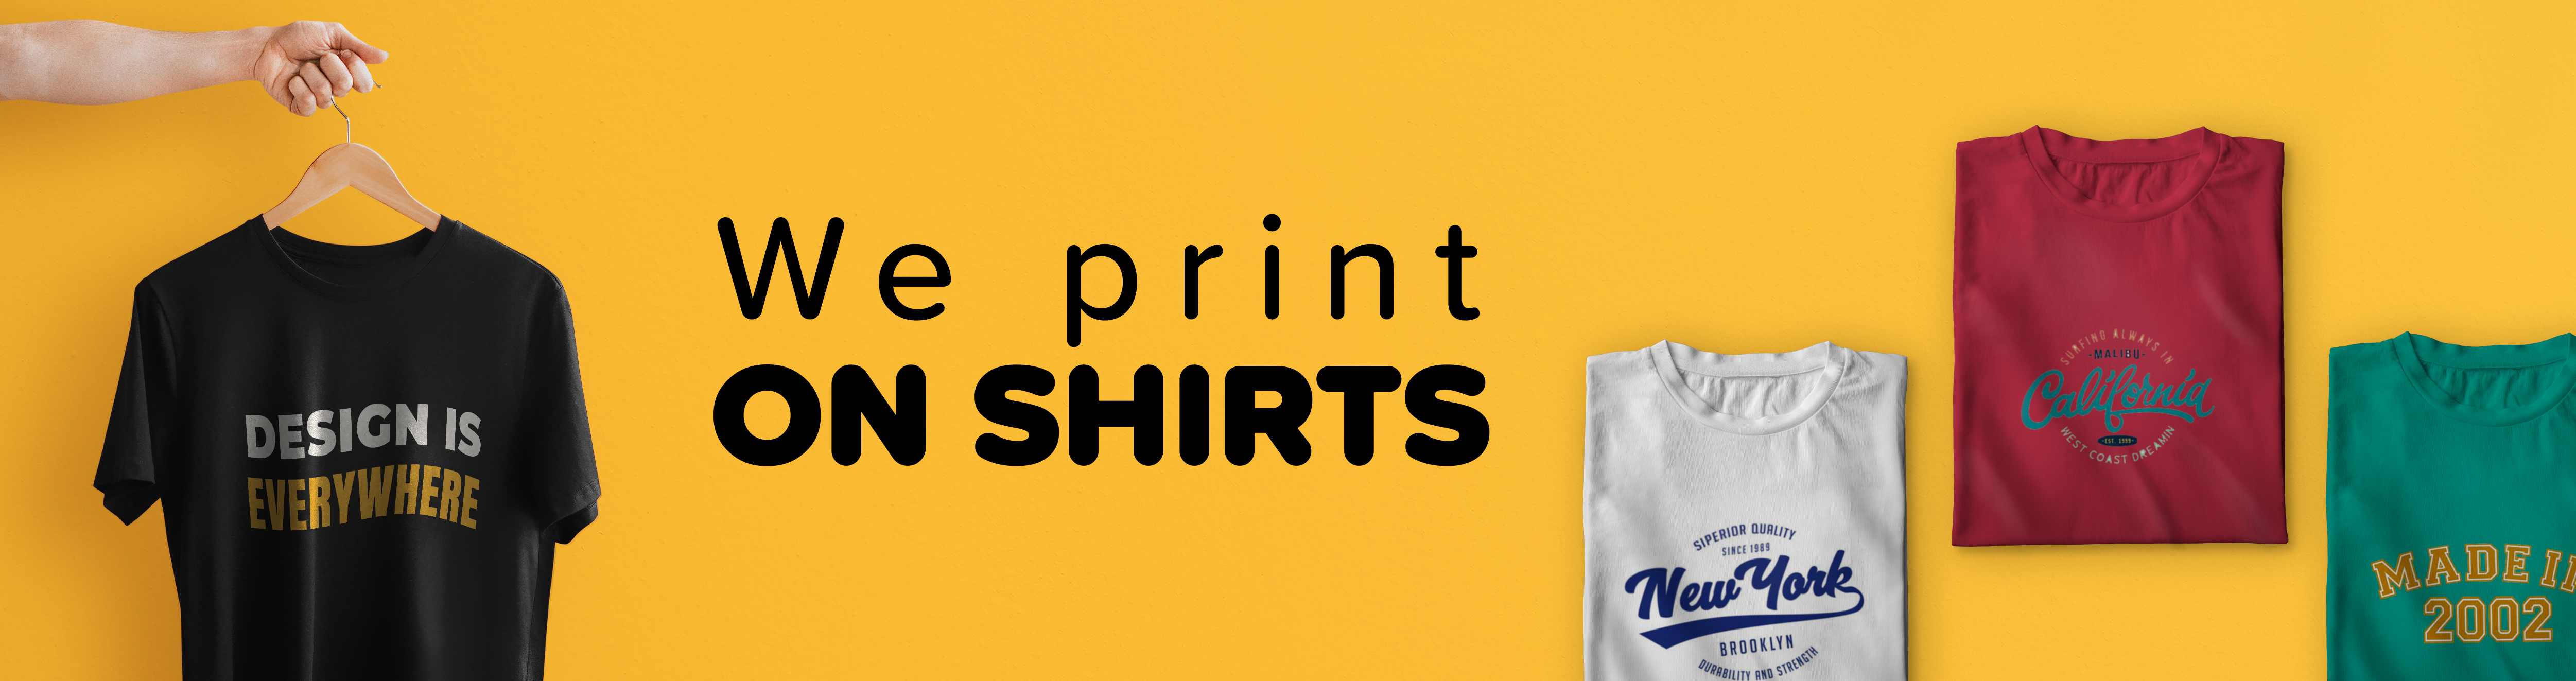 custom screen printing and custom made T-shirts at spectrum apparel shirt printing in san jose